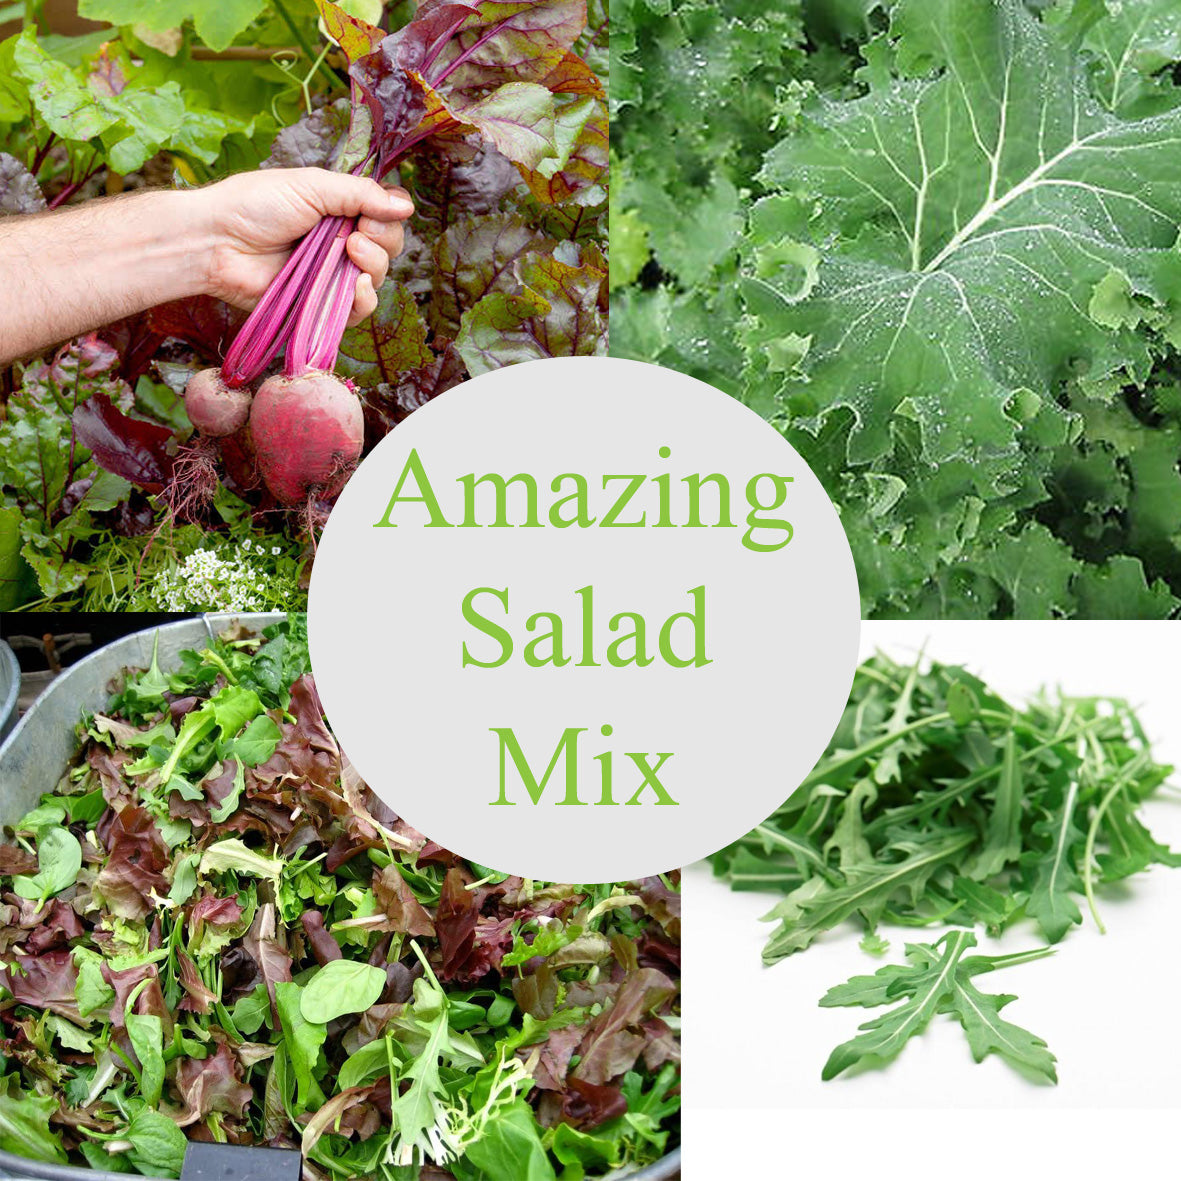 The Amazing Salad Mix